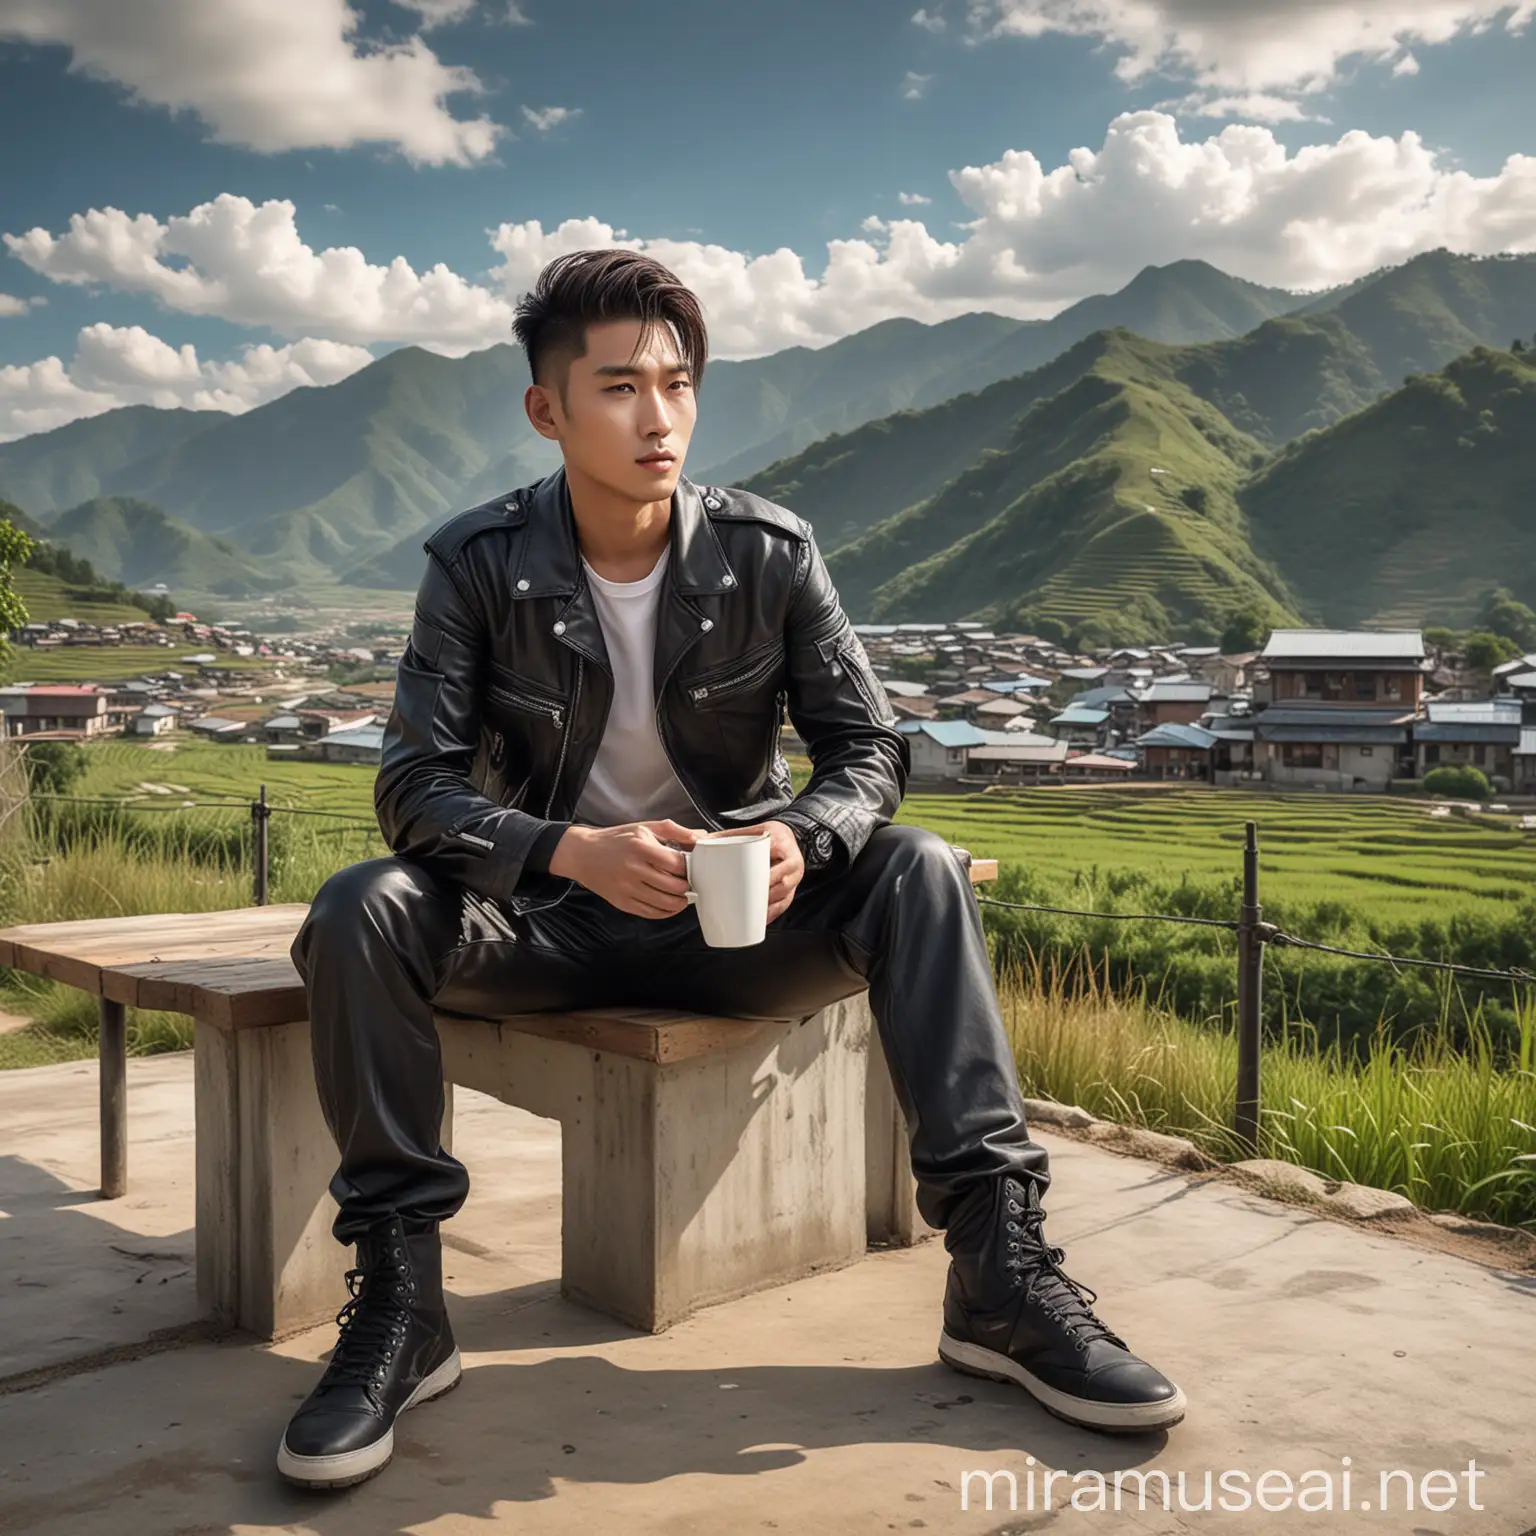 Stylish Korean Man Enjoying Coffee on Terrace with Mountain and Rice Field Views